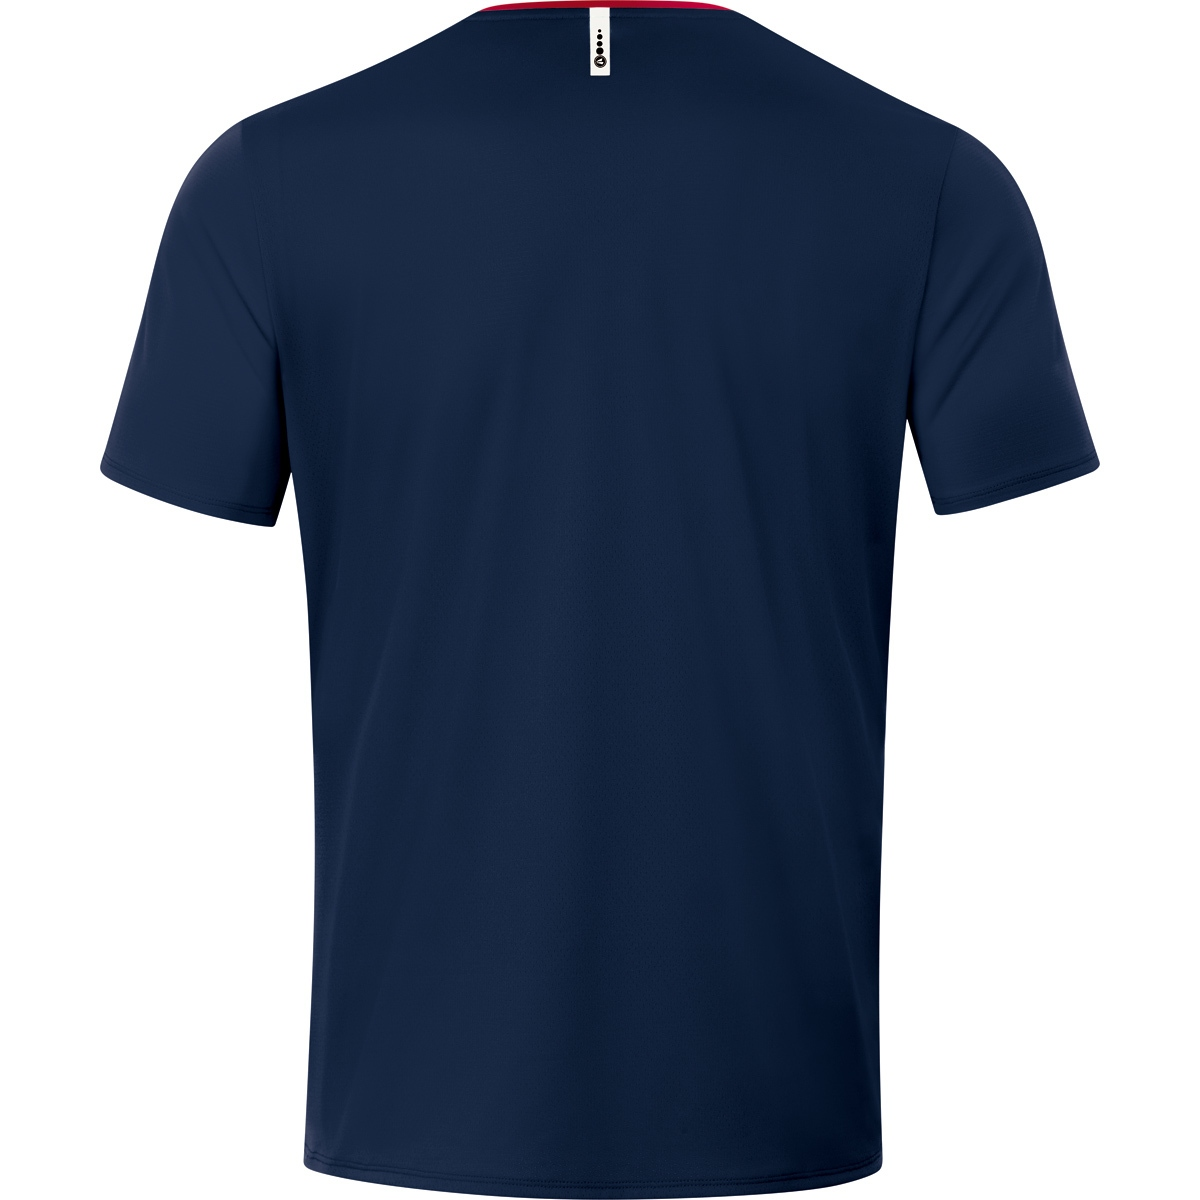 Gr. JAKO 6120 rot, 2.0 Kinder, marine/chili T-Shirt 116, Champ